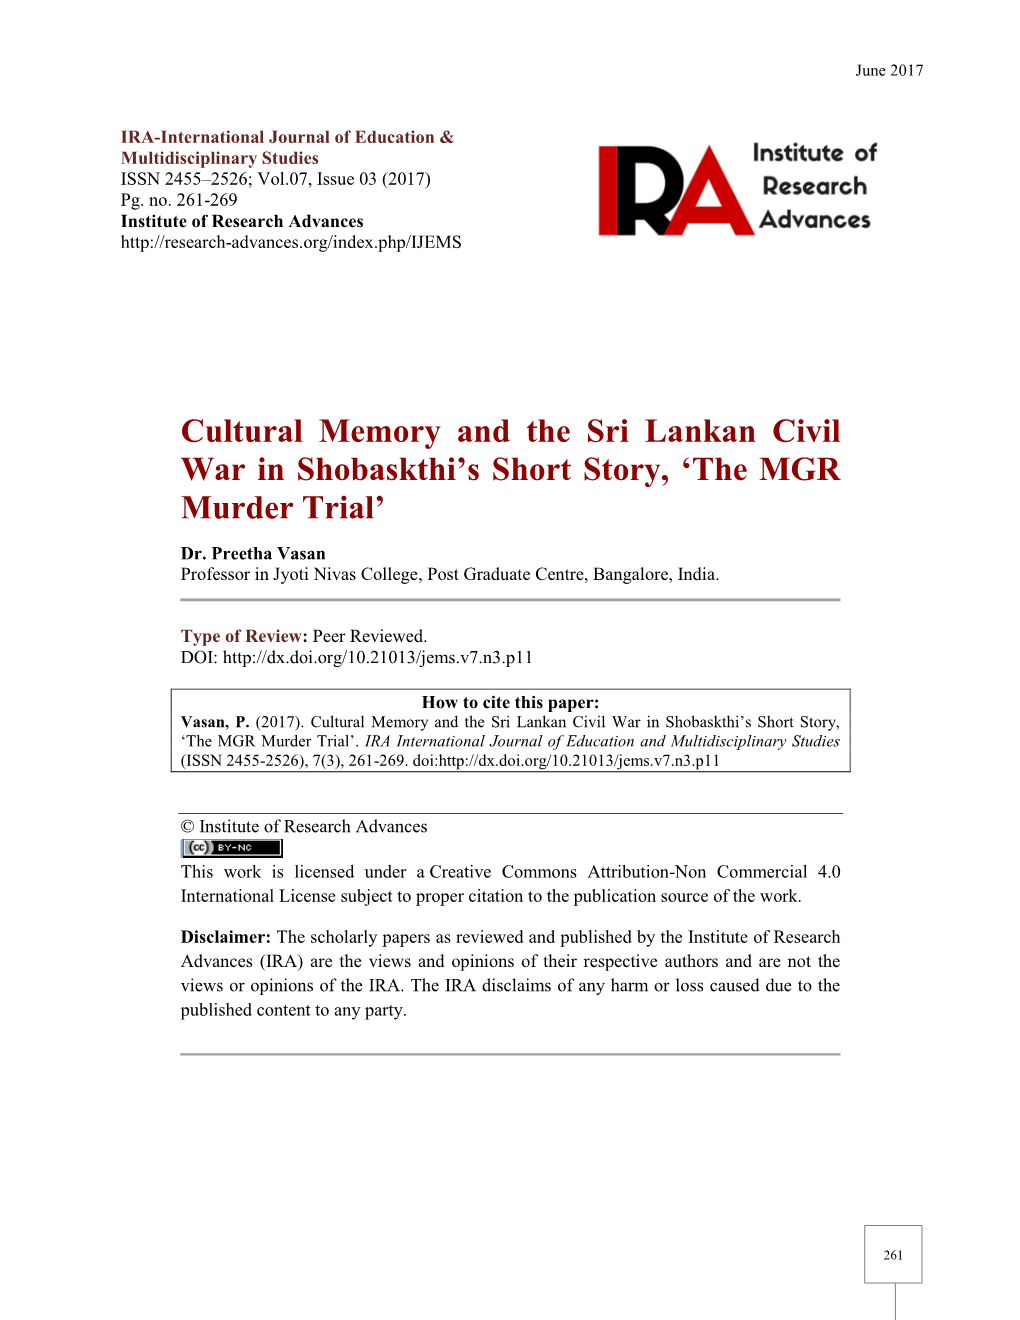 Cultural Memory and the Sri Lankan Civil War in Shobaskthi’S Short Story, ‘The MGR Murder Trial’